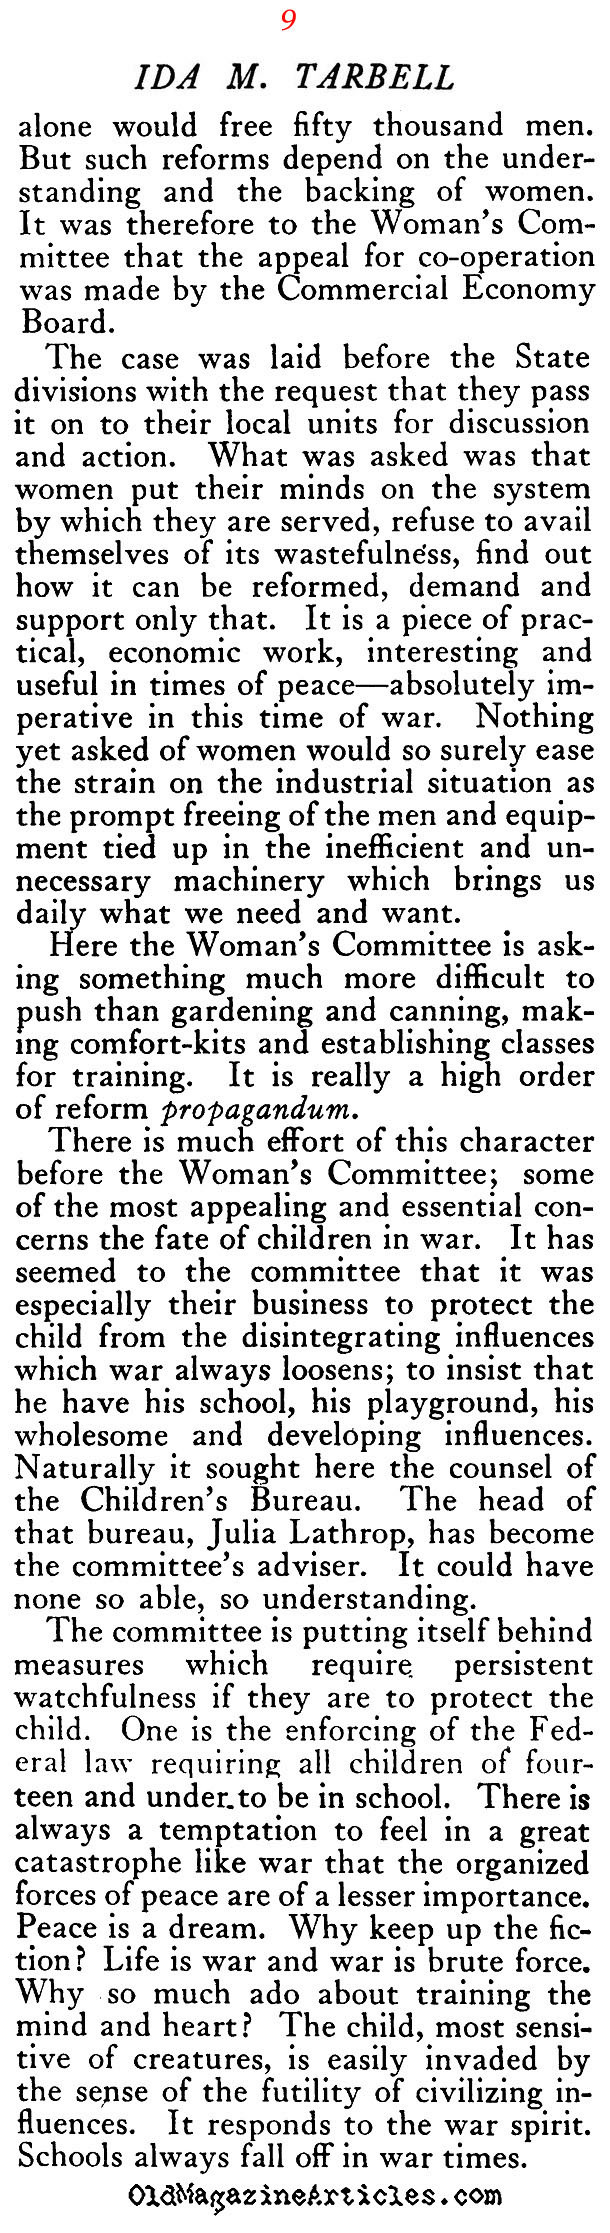 Winning the War with Women (Harper's Monthly, 1917)